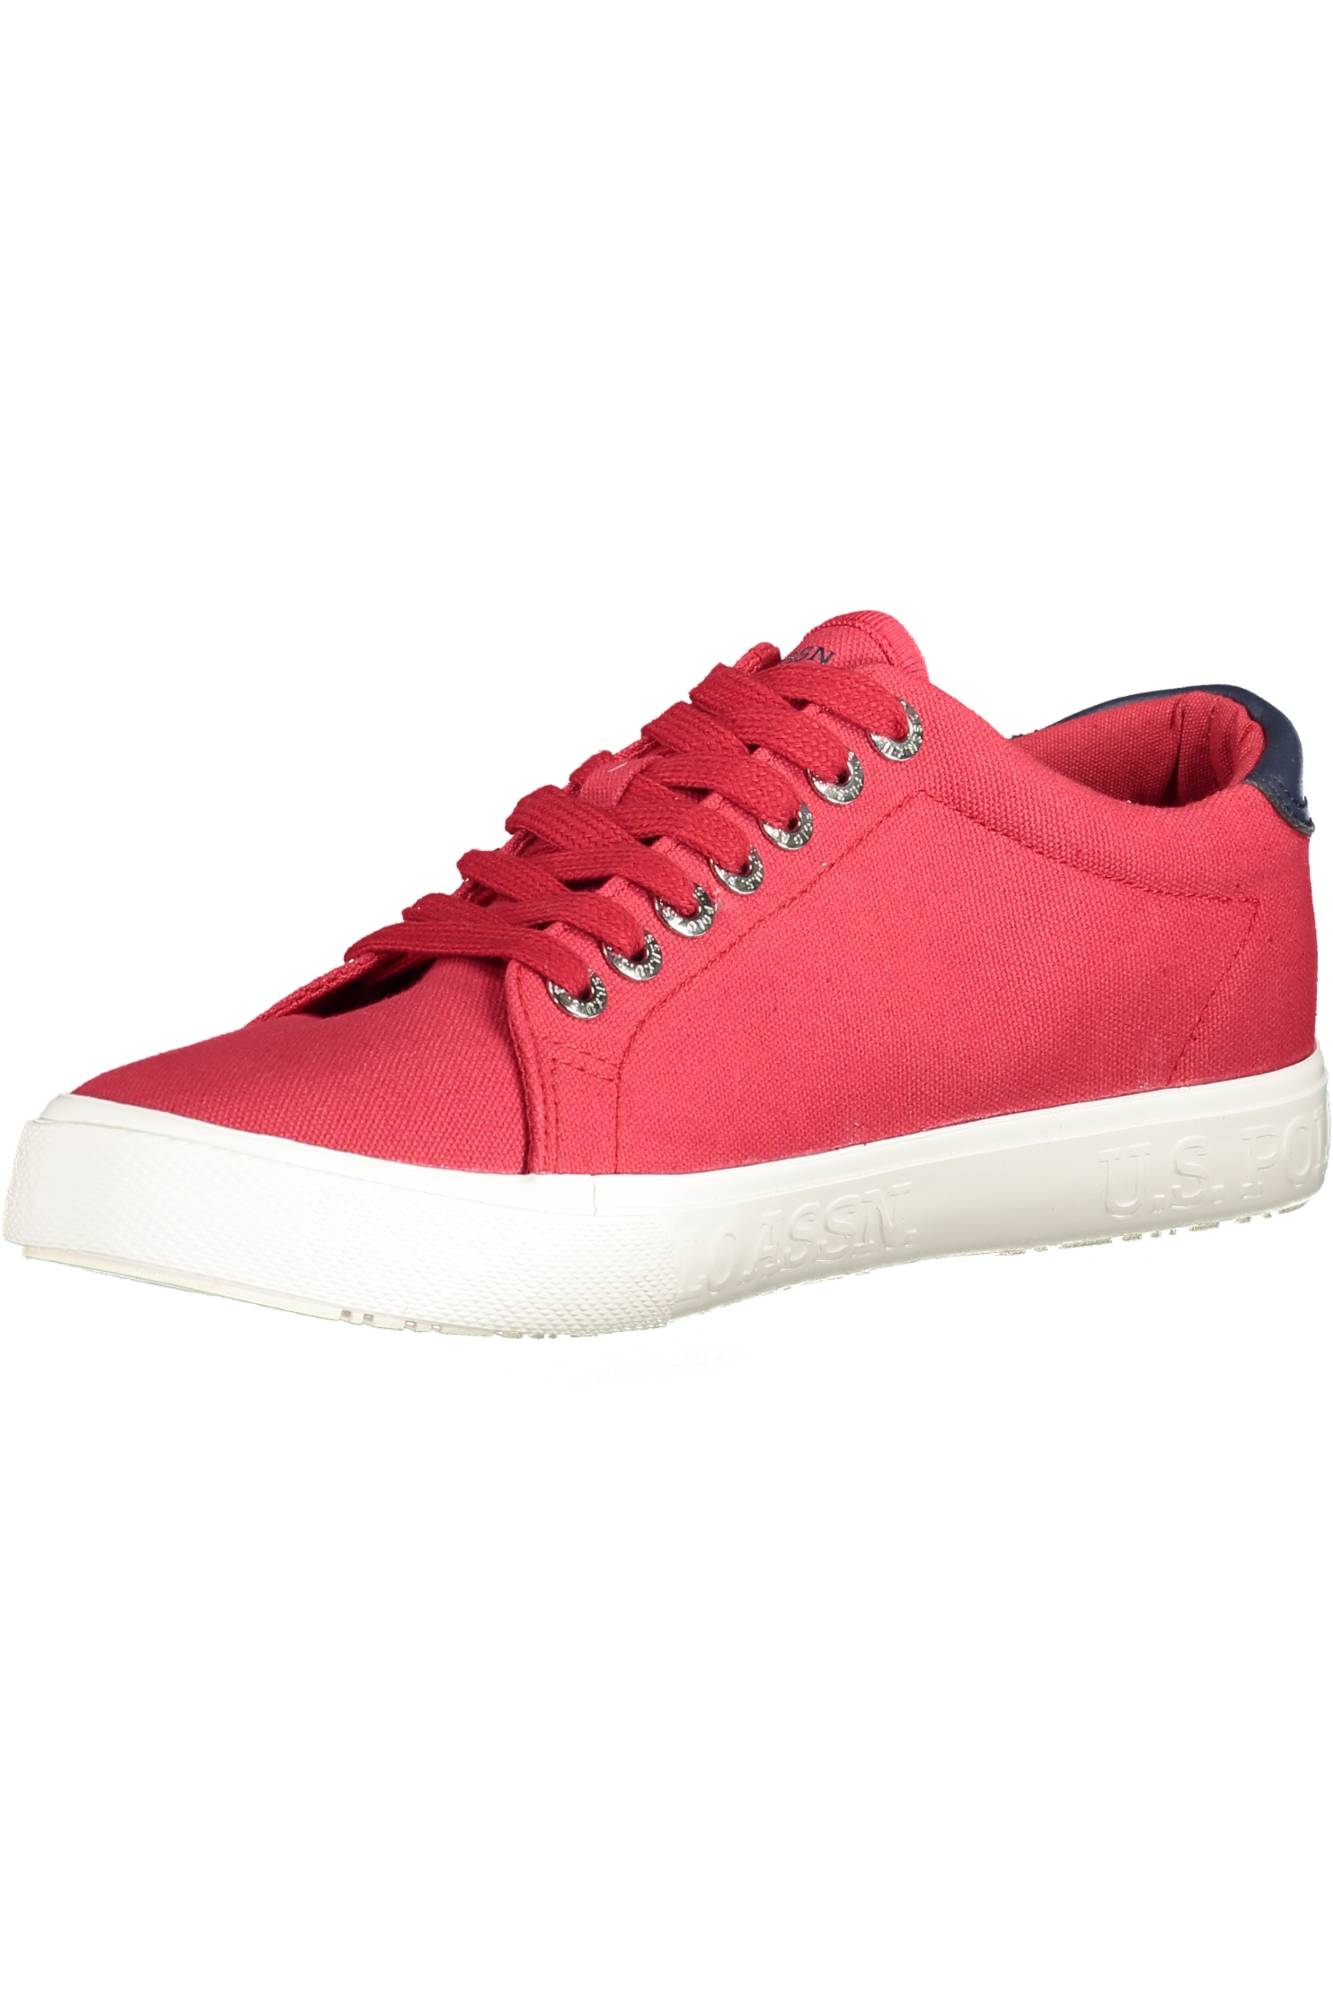 U.S. POLO ASSN. Red Sneakers - Fizigo